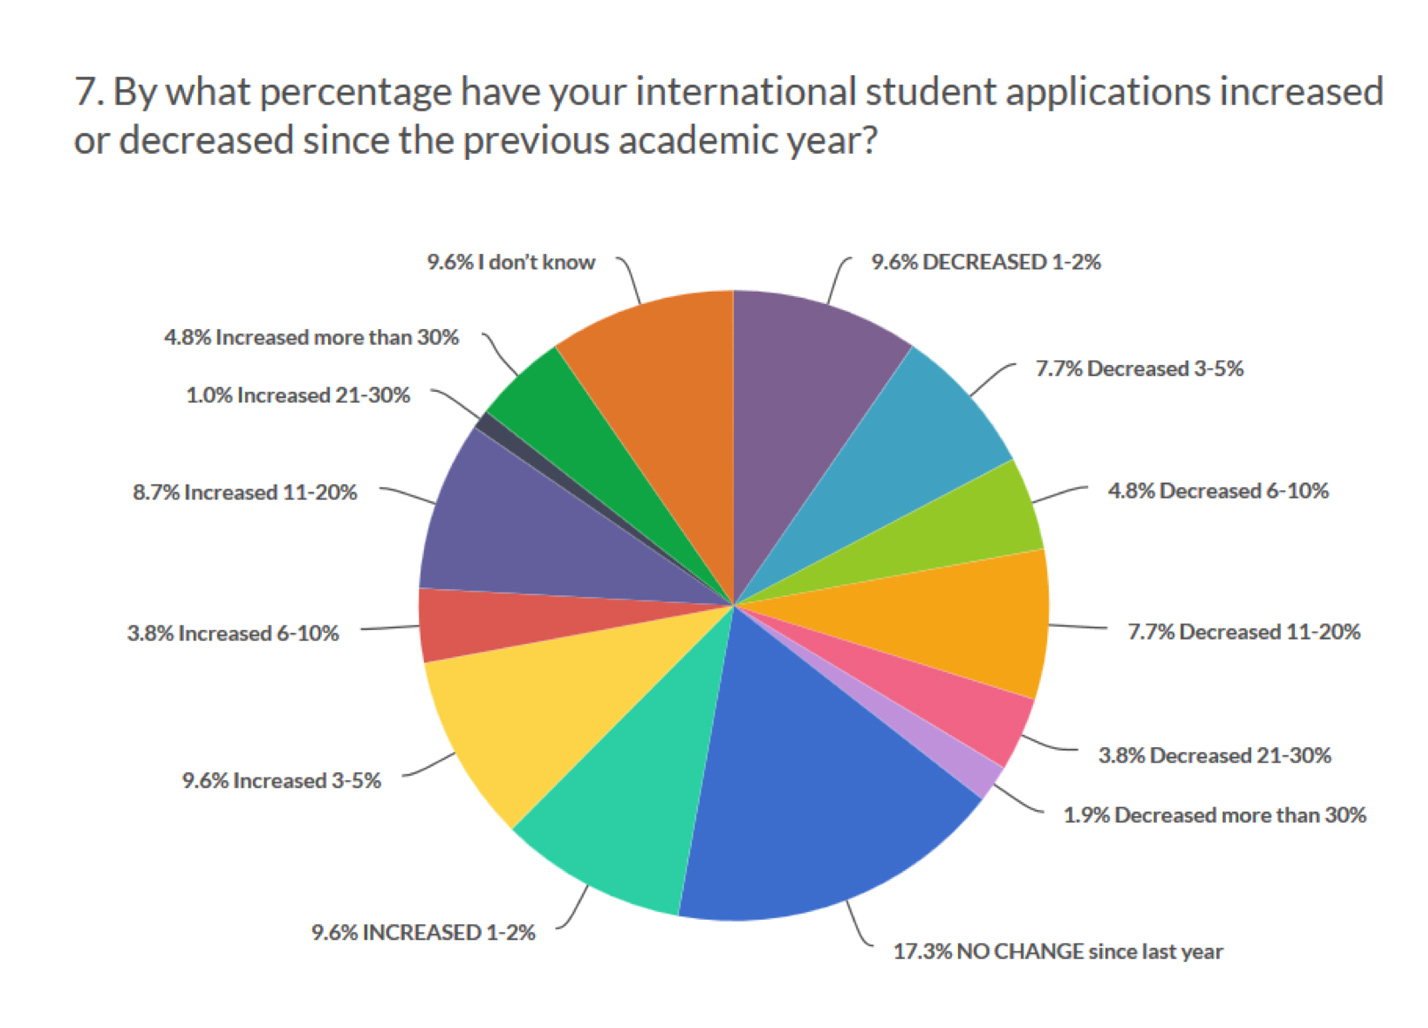 Data: International Student Applications